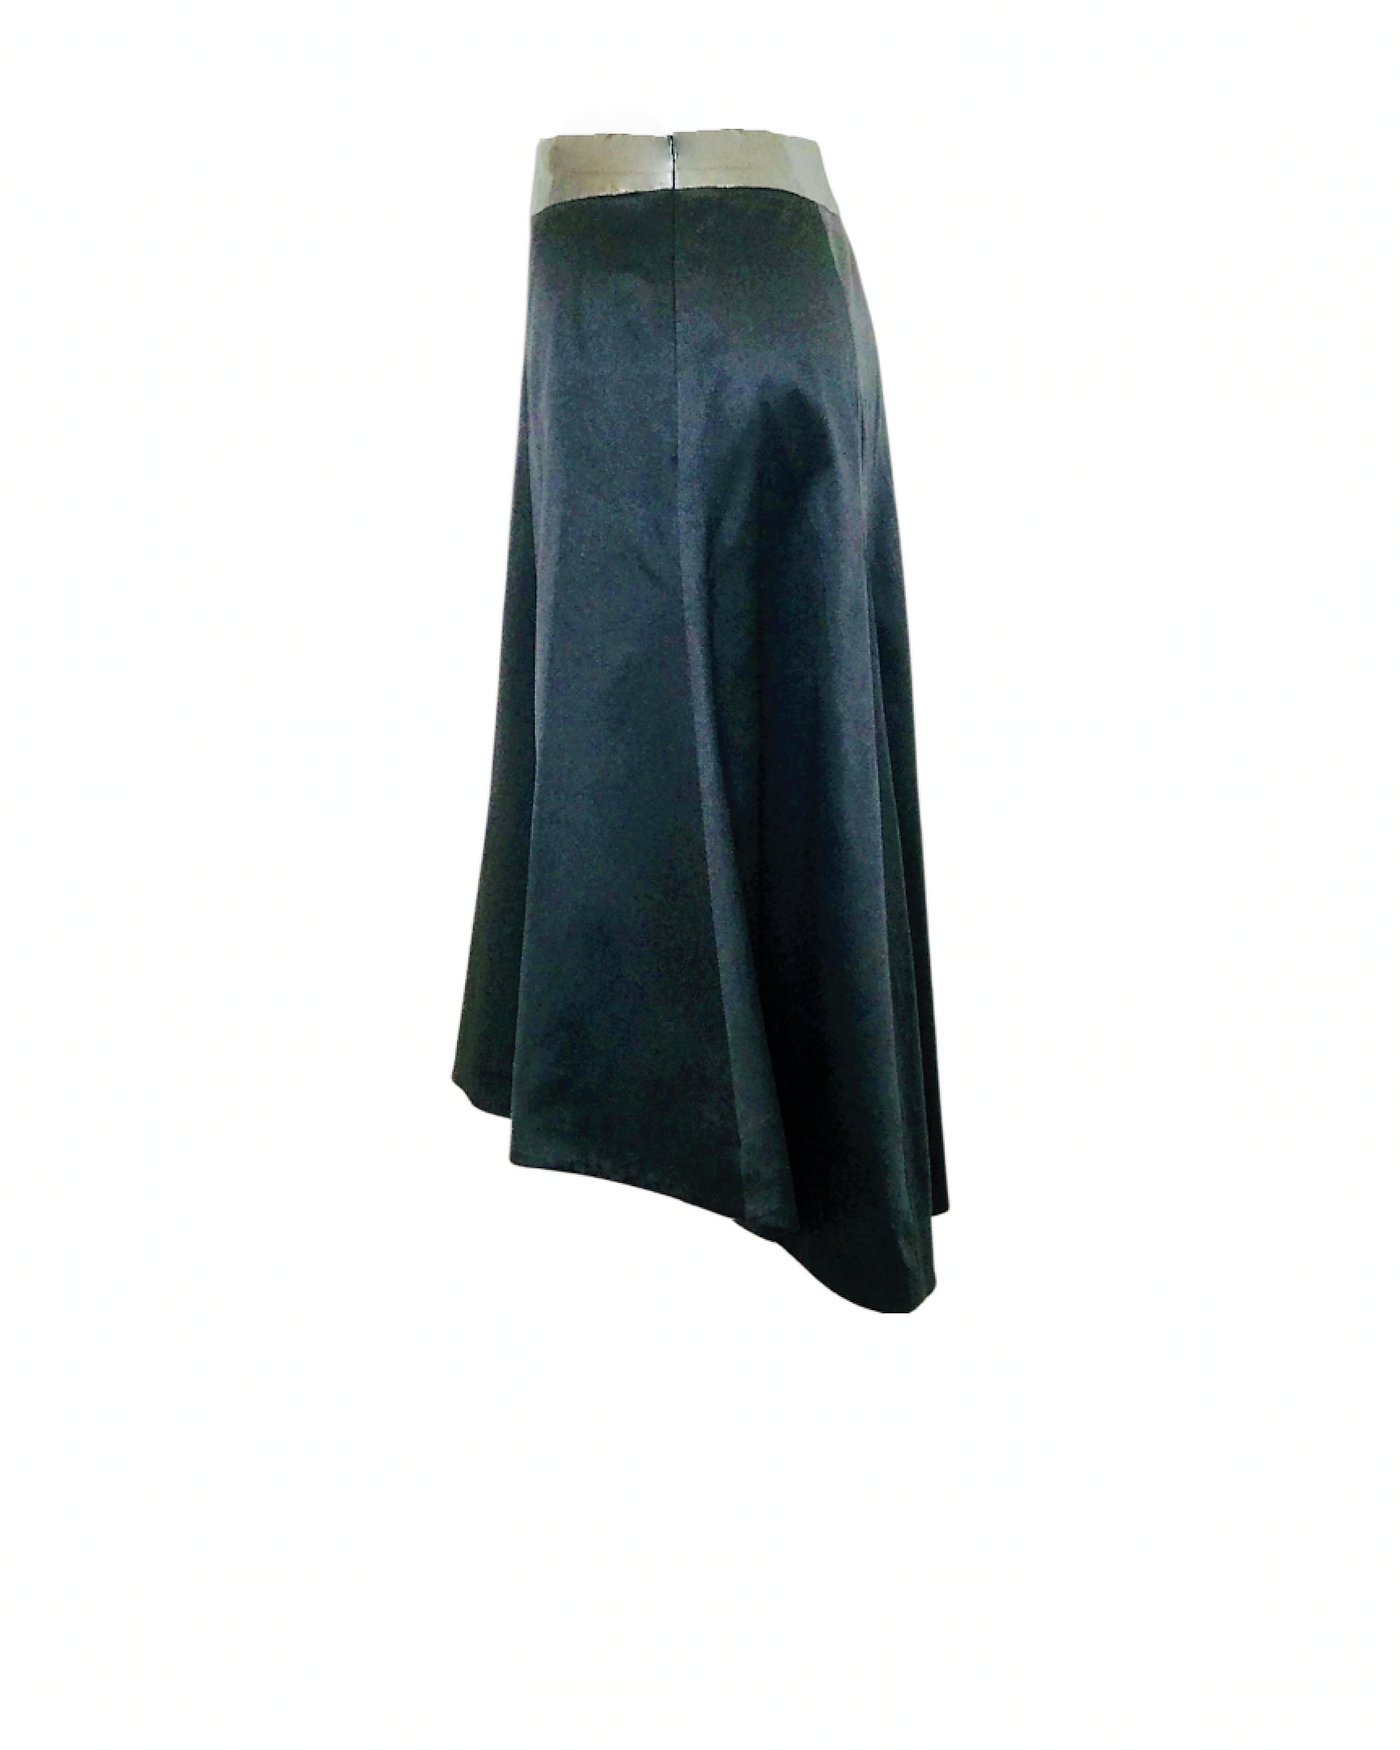 Black silk Satin High Low skirt